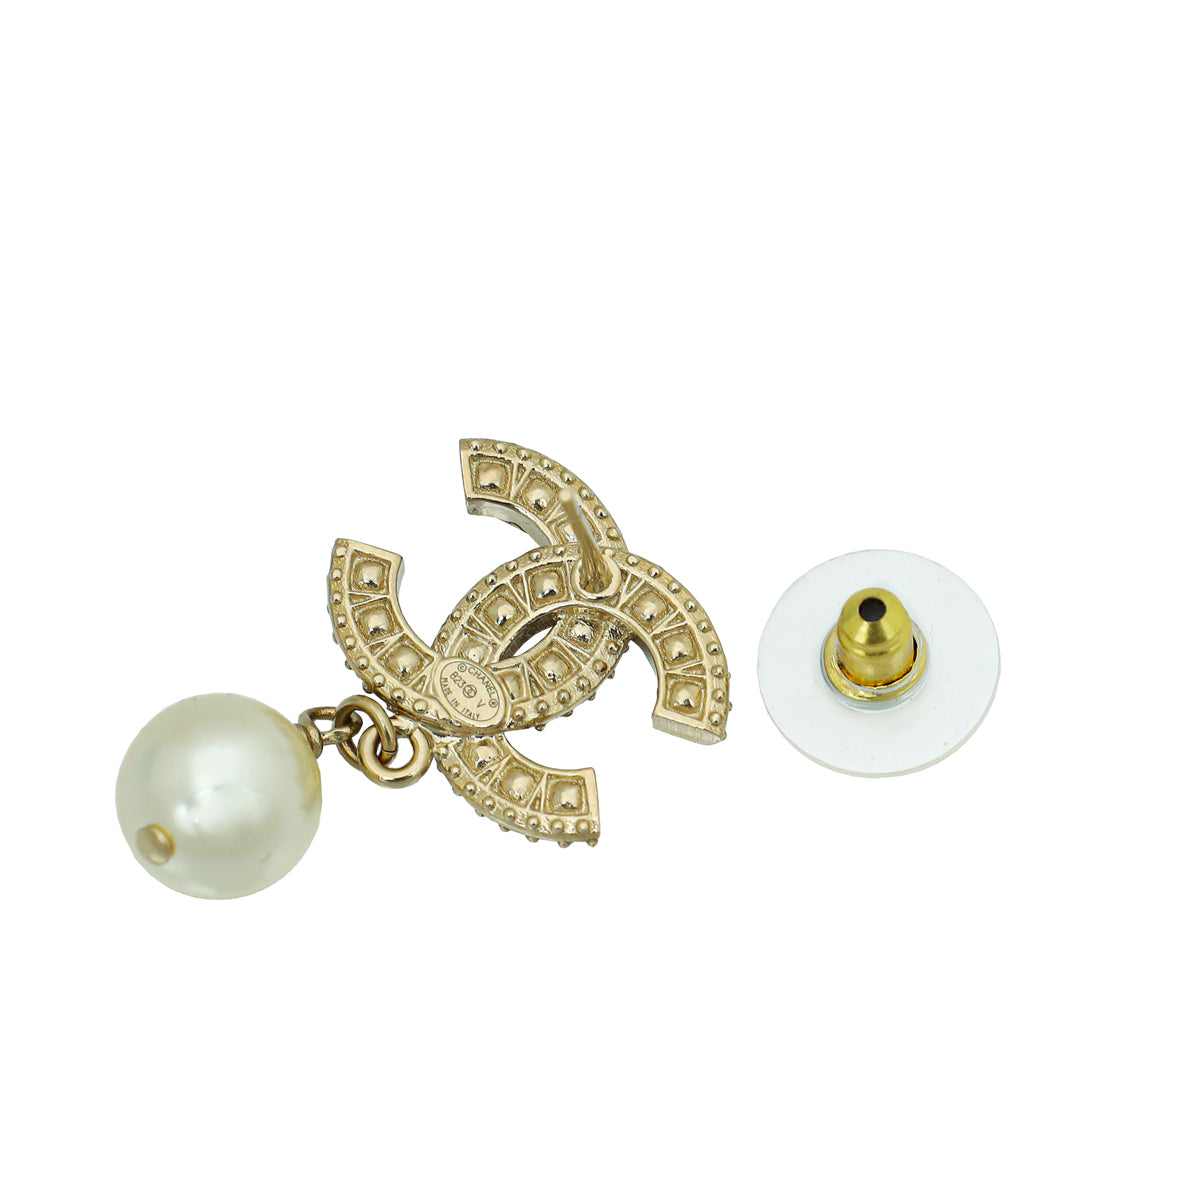 Chanel Light Gold CC Crystal Pearl Drop Earrings